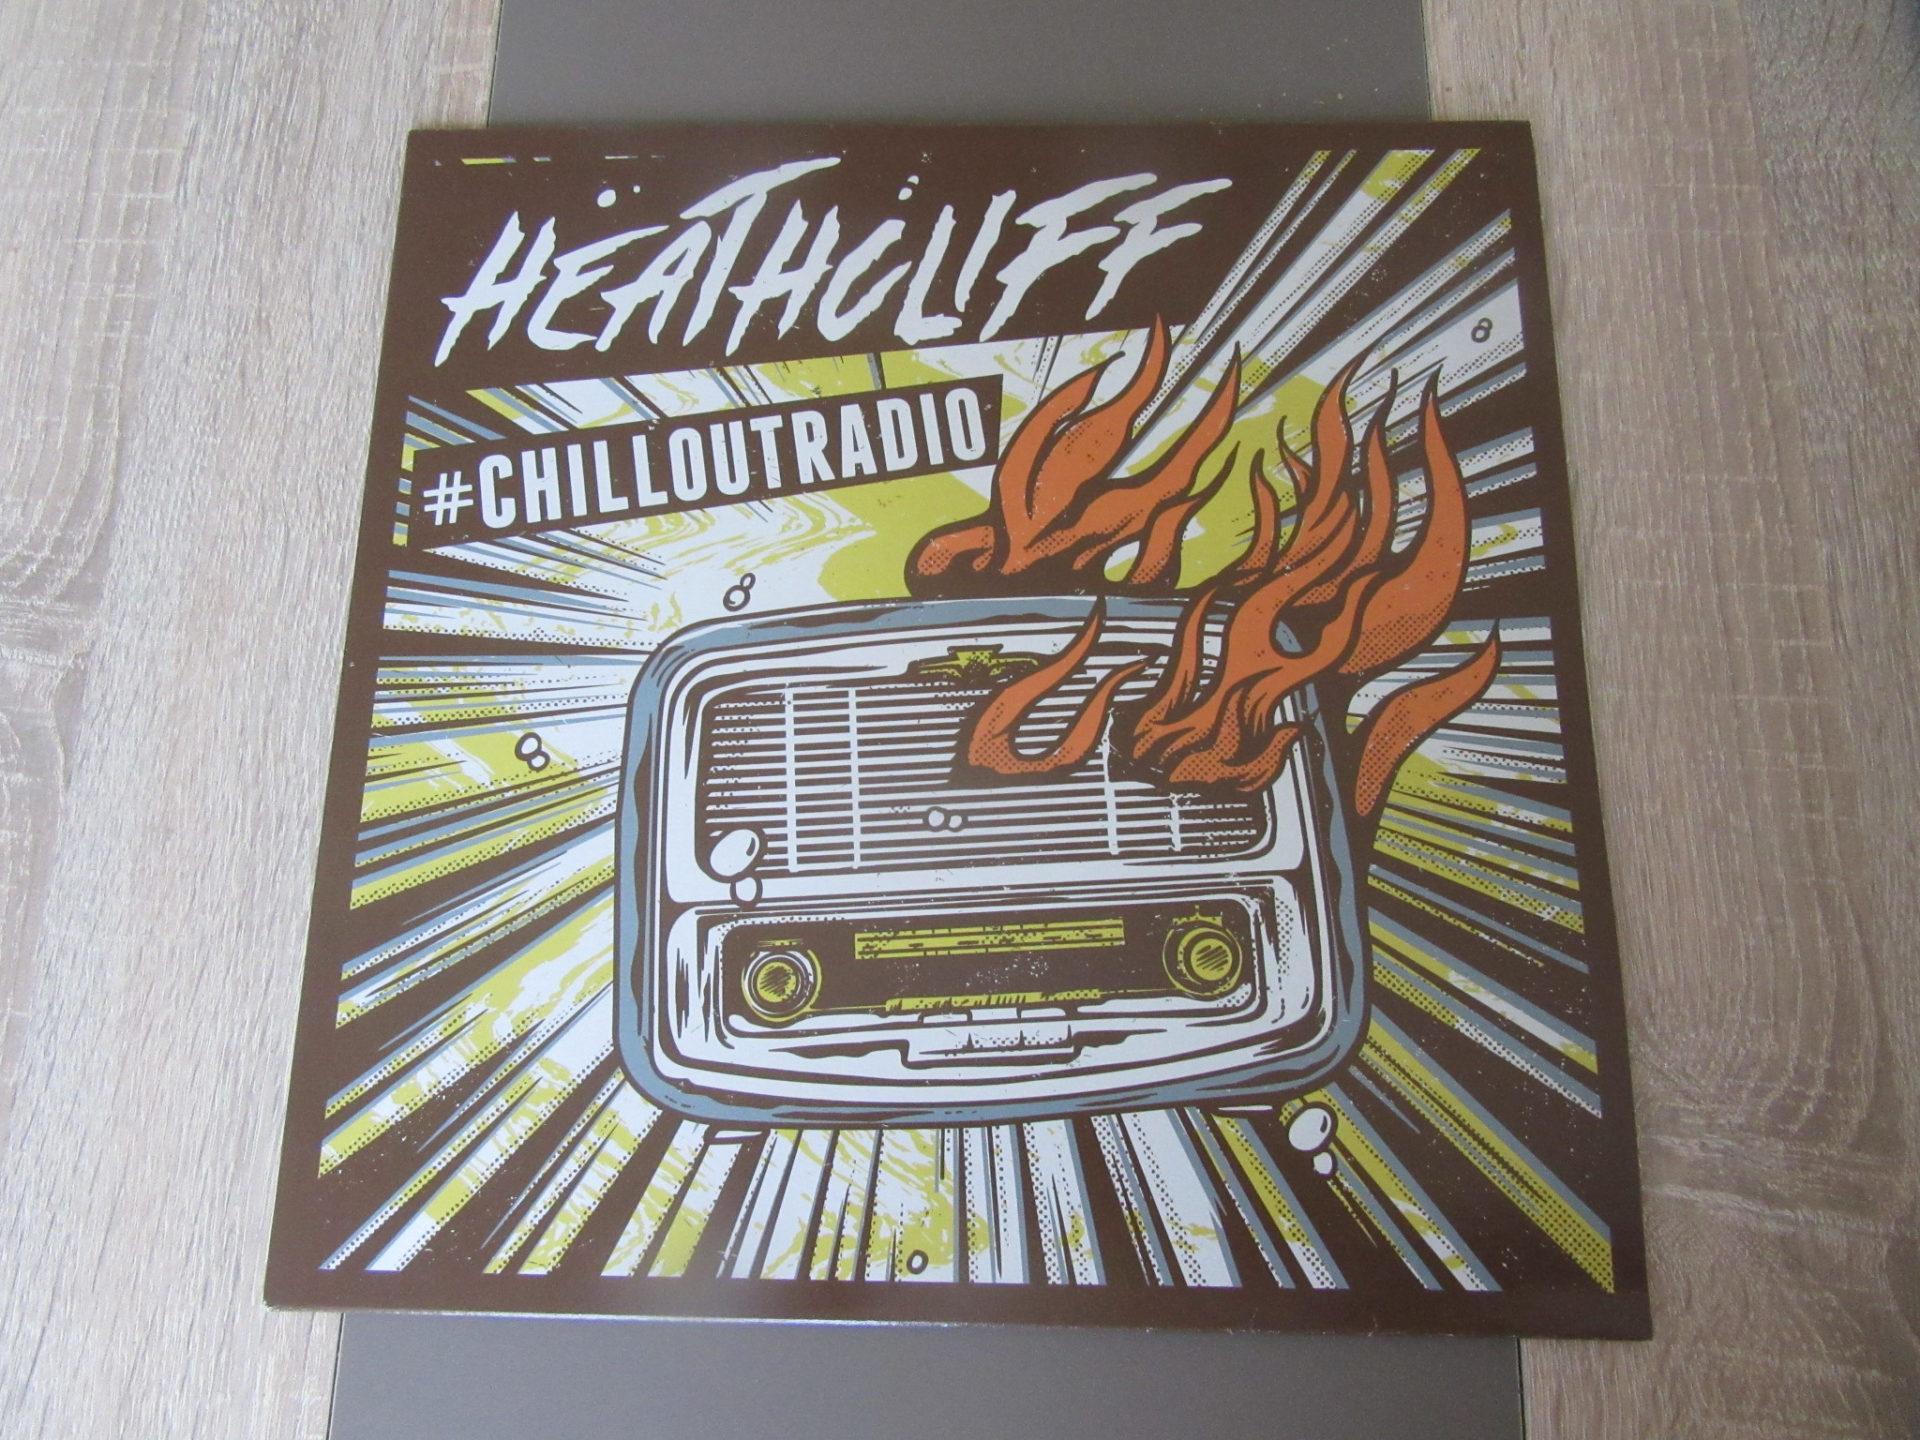 Heathcliff - "Chillout Radio" col. Vinyl-LP 3